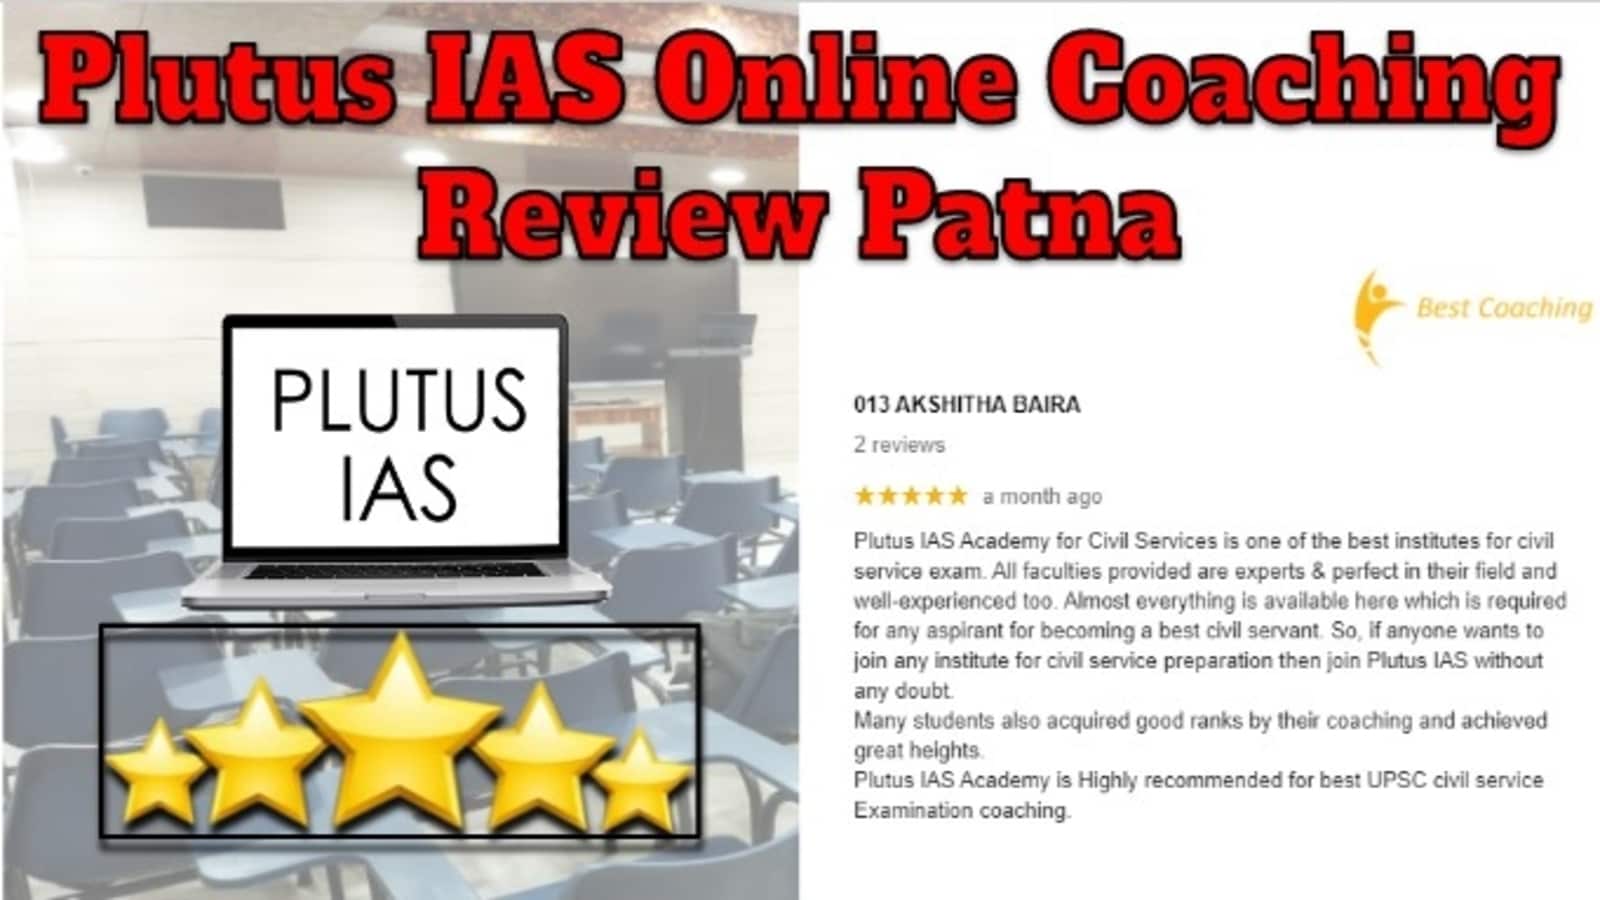 Plutus IAS Online Coaching Review Patna